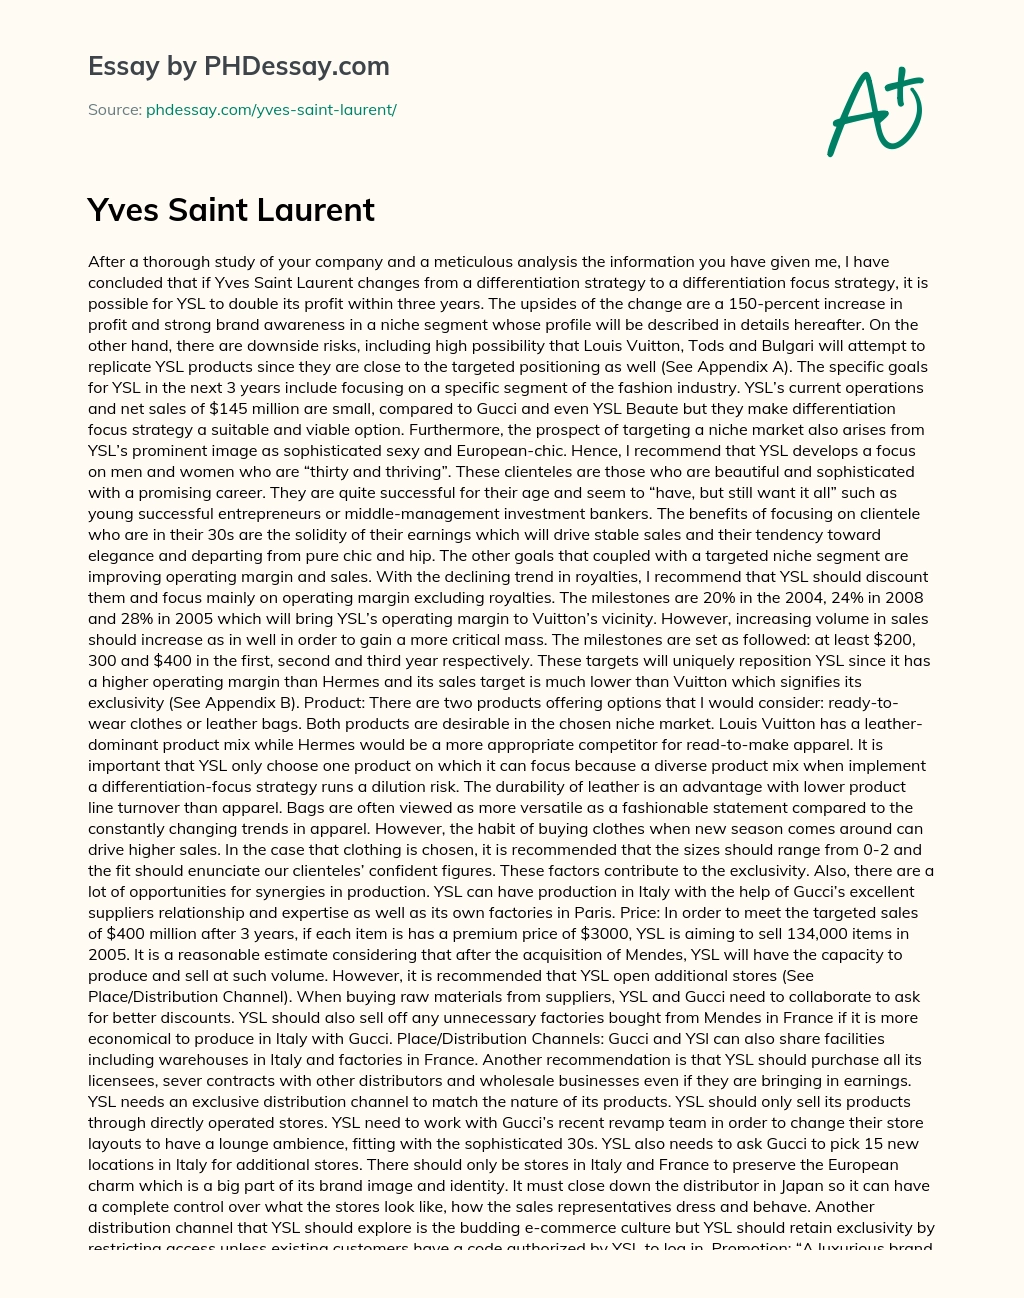 Yves Saint Laurent essay